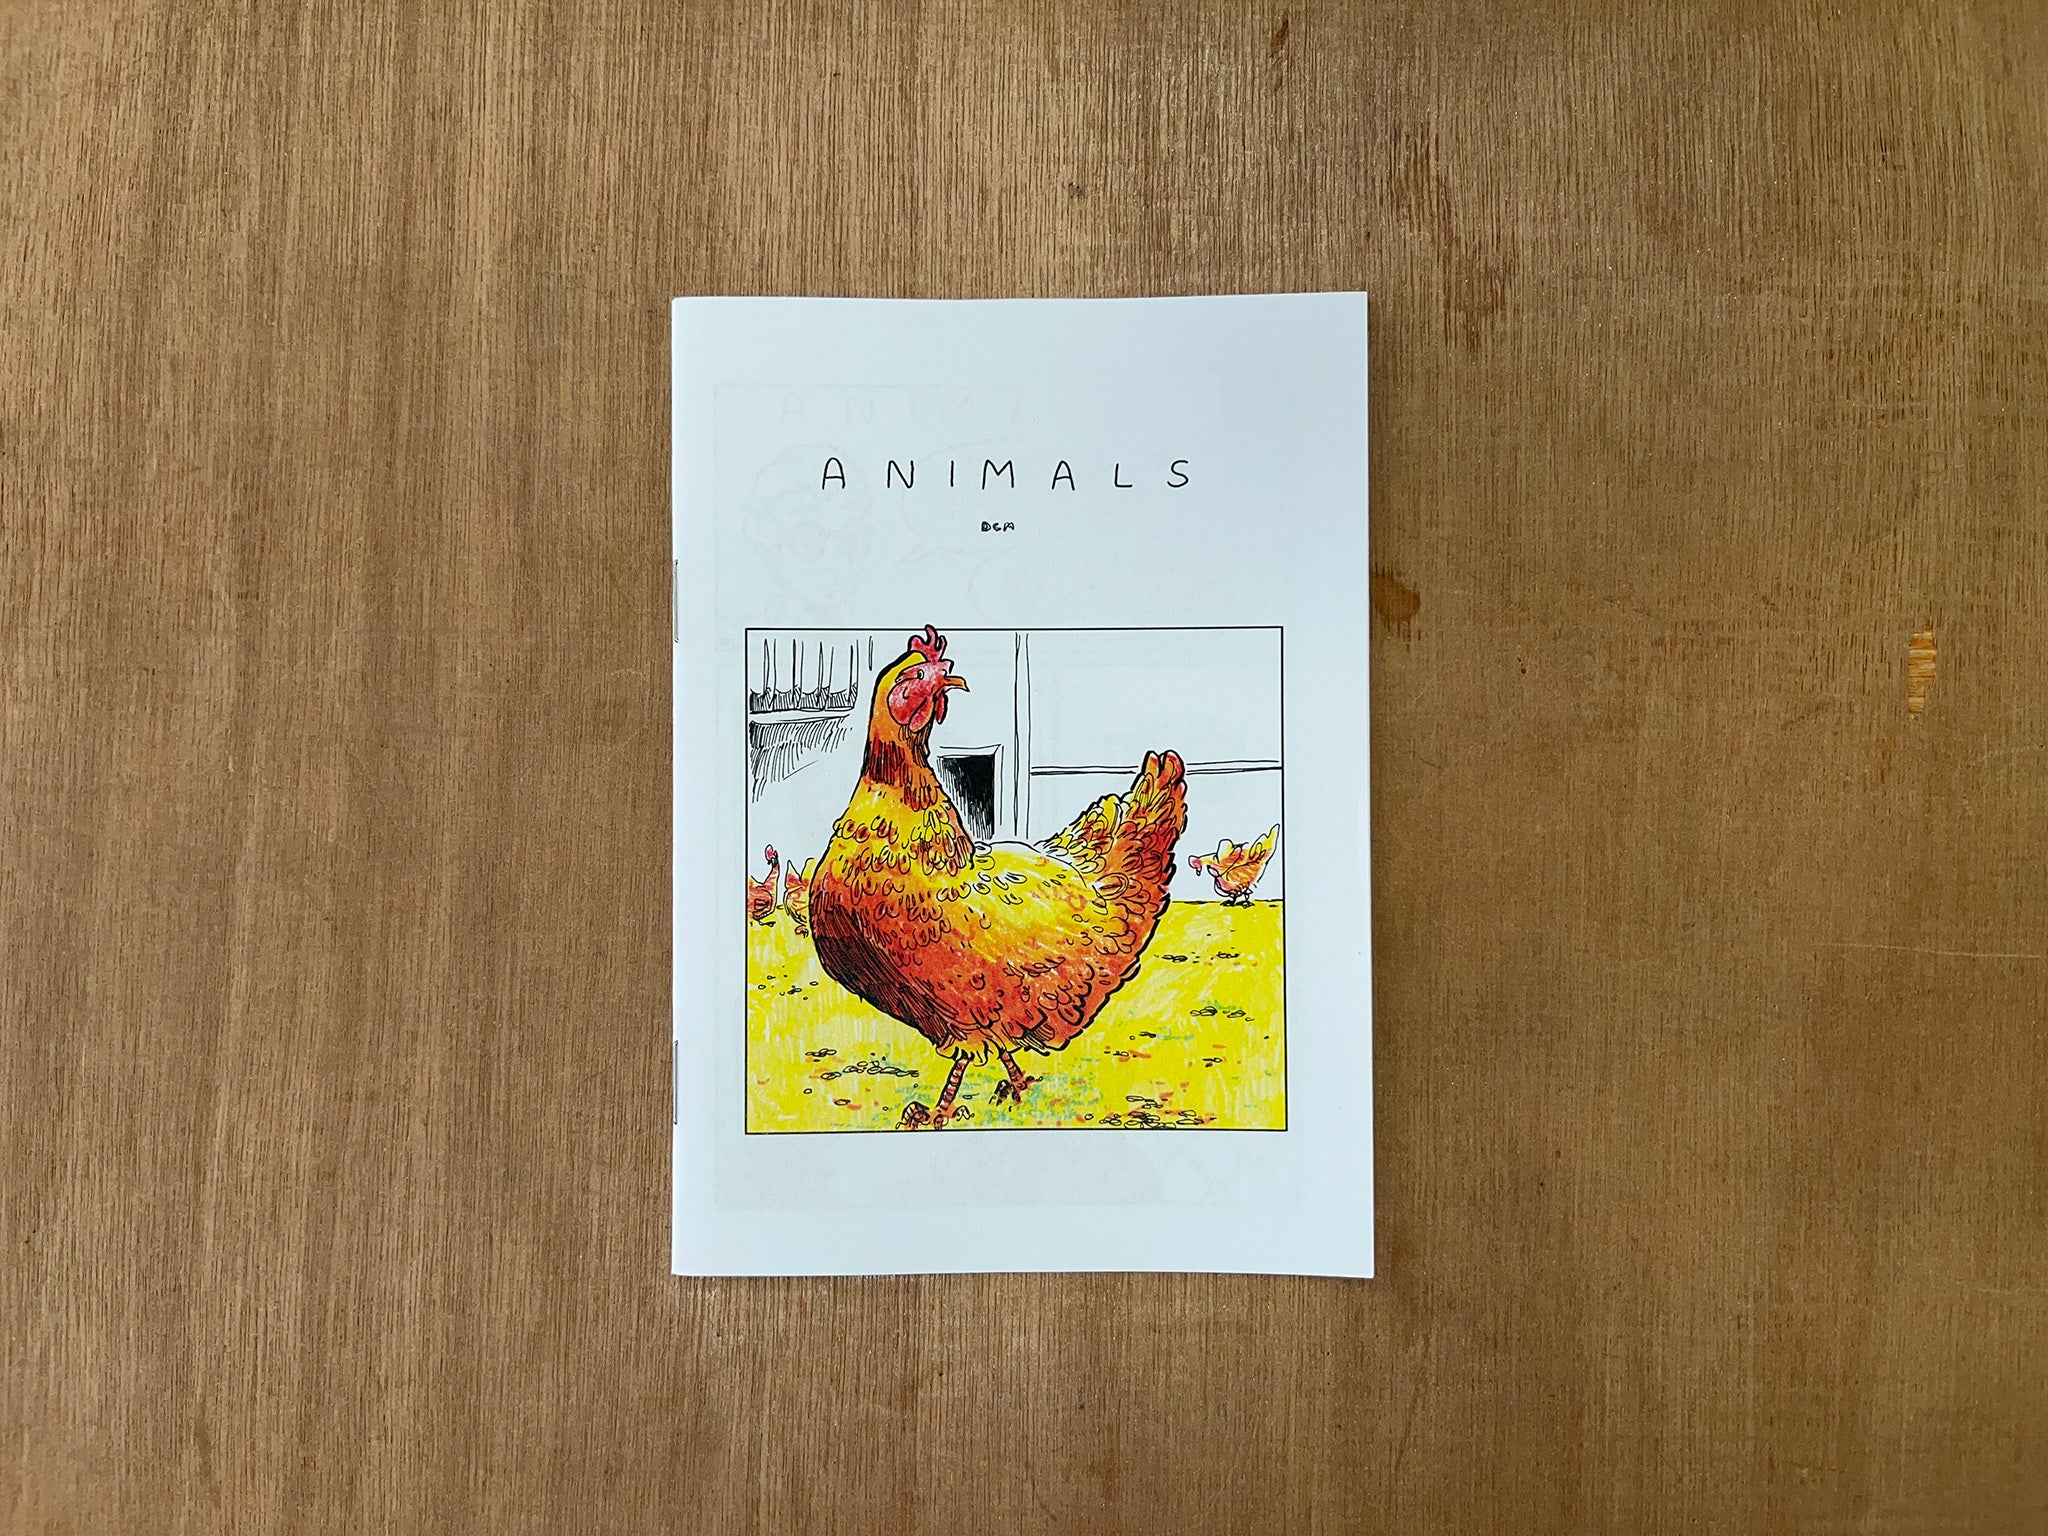 ANIMALS by David Mahler